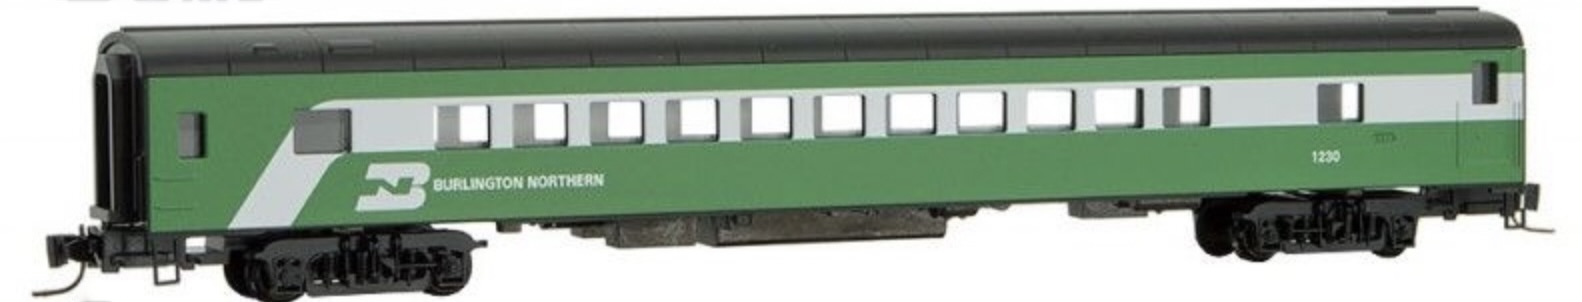 Z Scale - Micro-Trains - 551 53 170 - Passenger Car, Lightweight, Smoothside, Coach - Burlington Northern - 1230